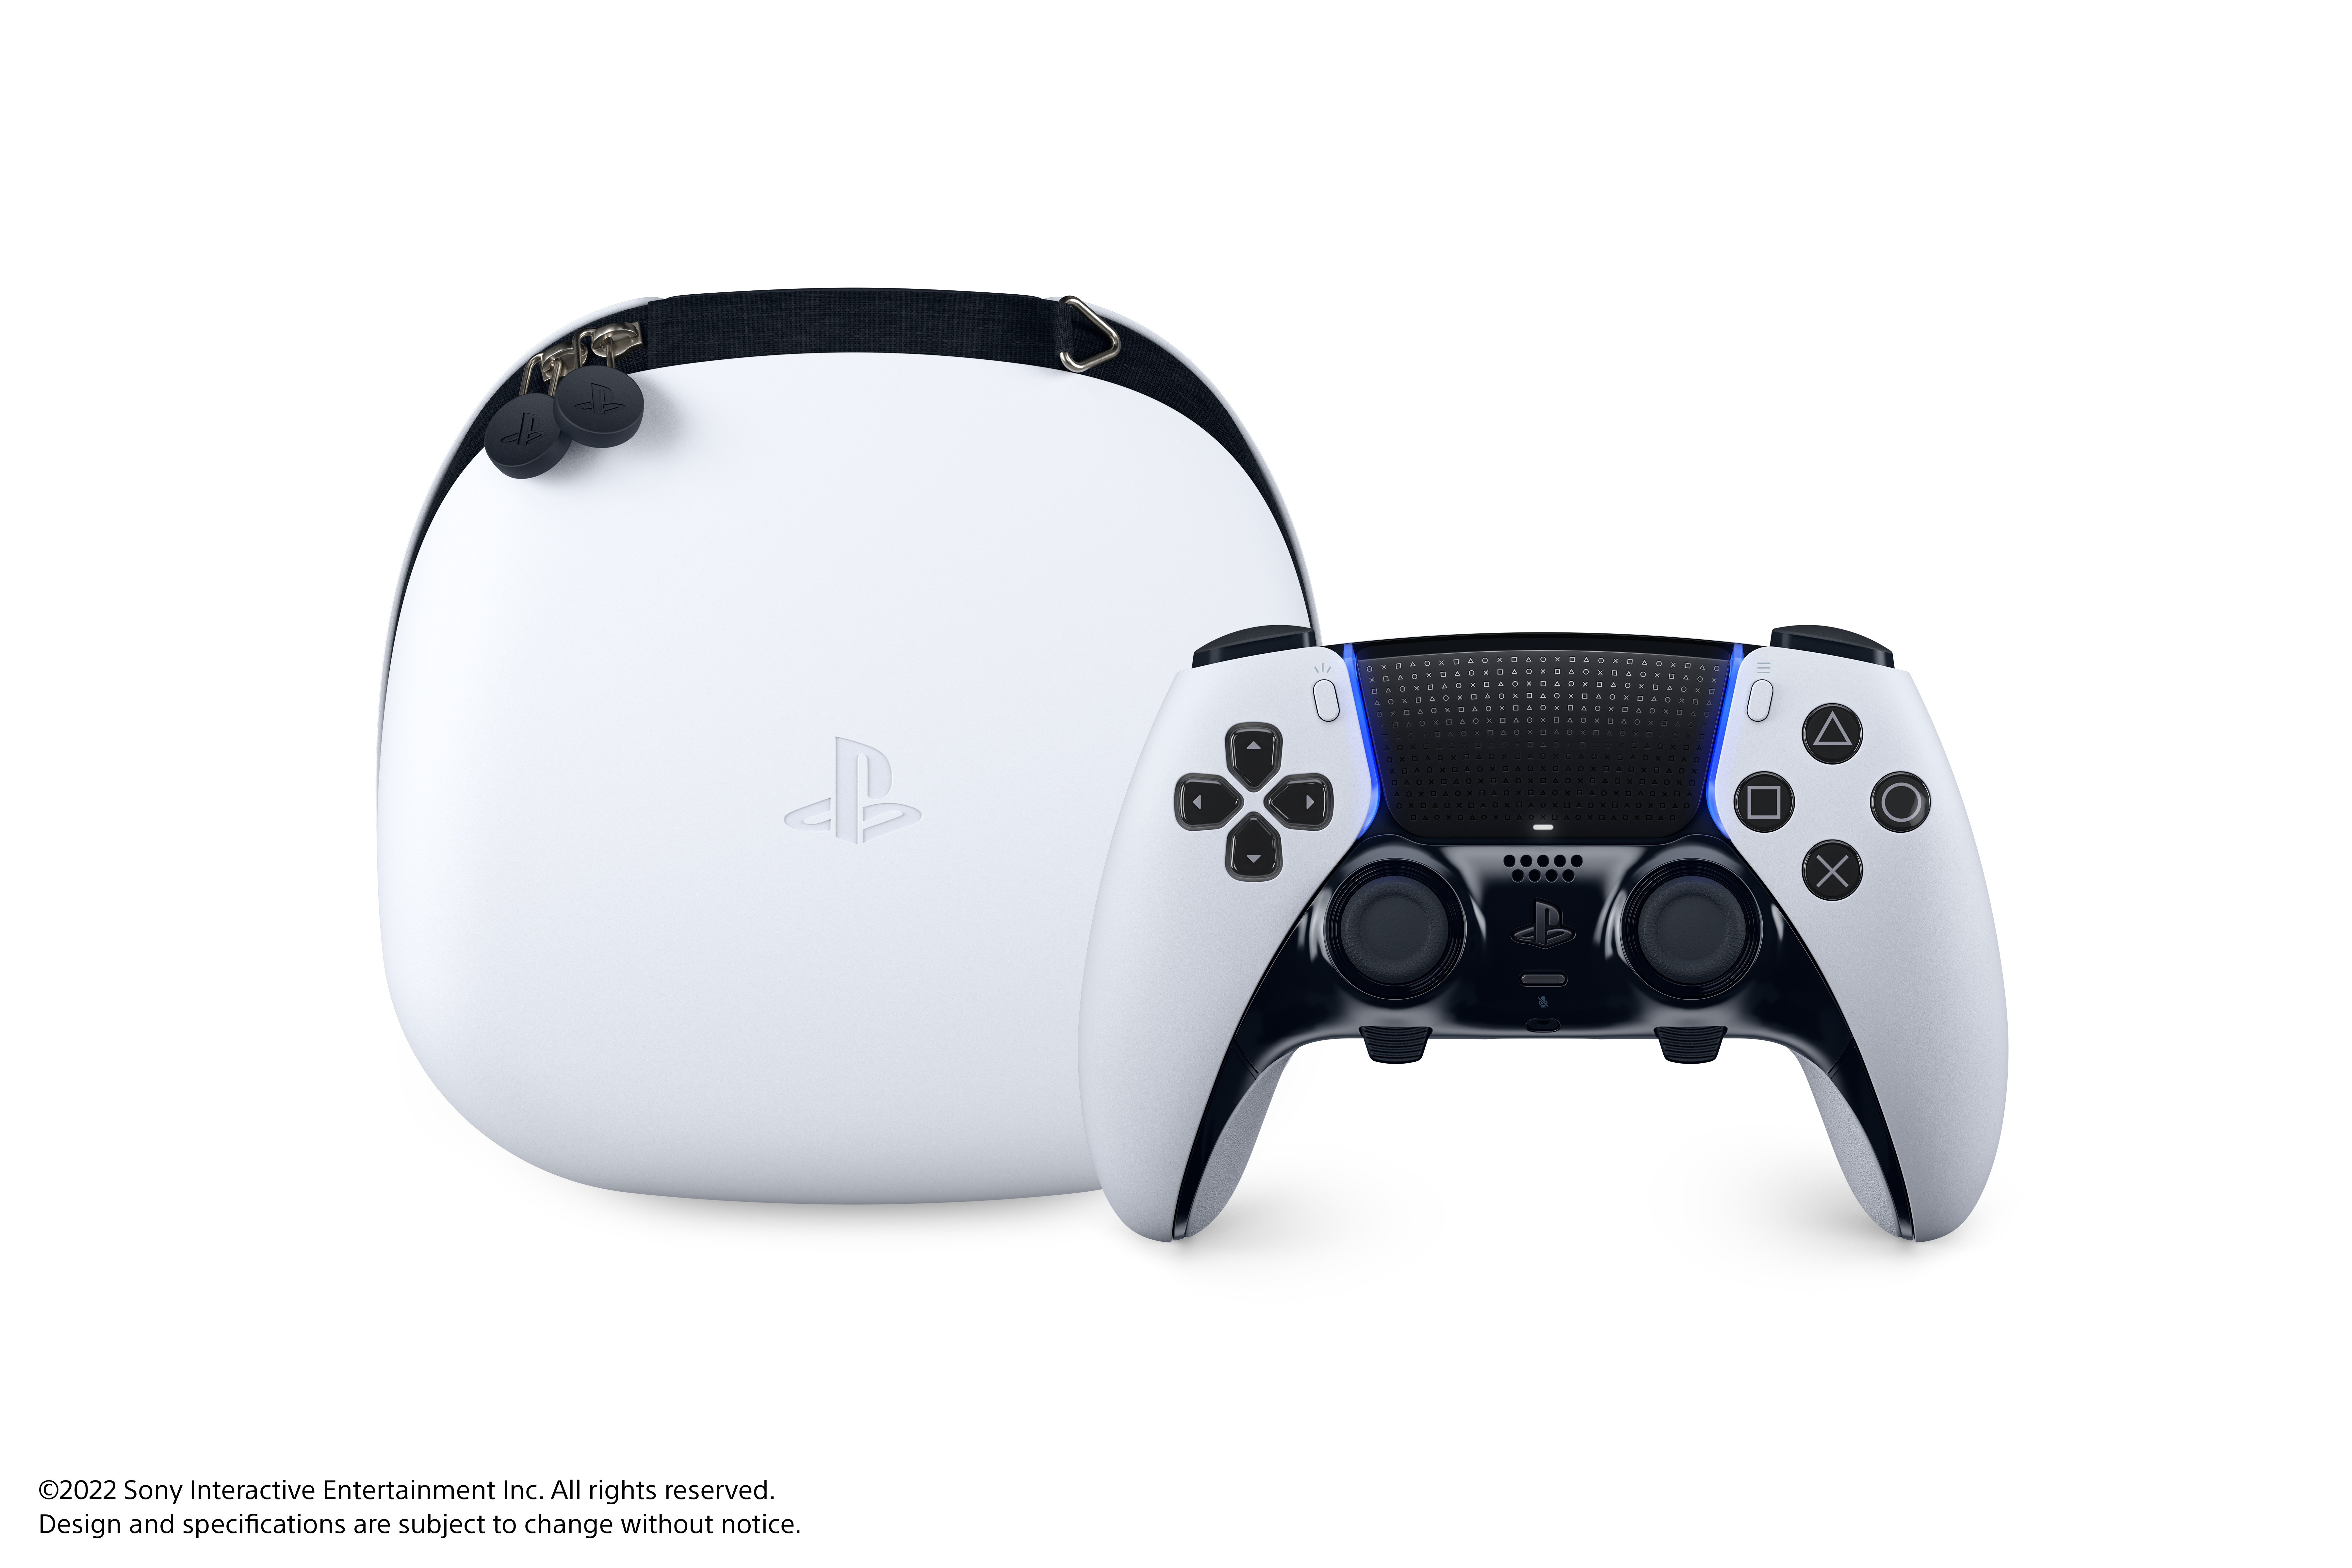 Polka dots - Sony PlayStation 5 Console Skins